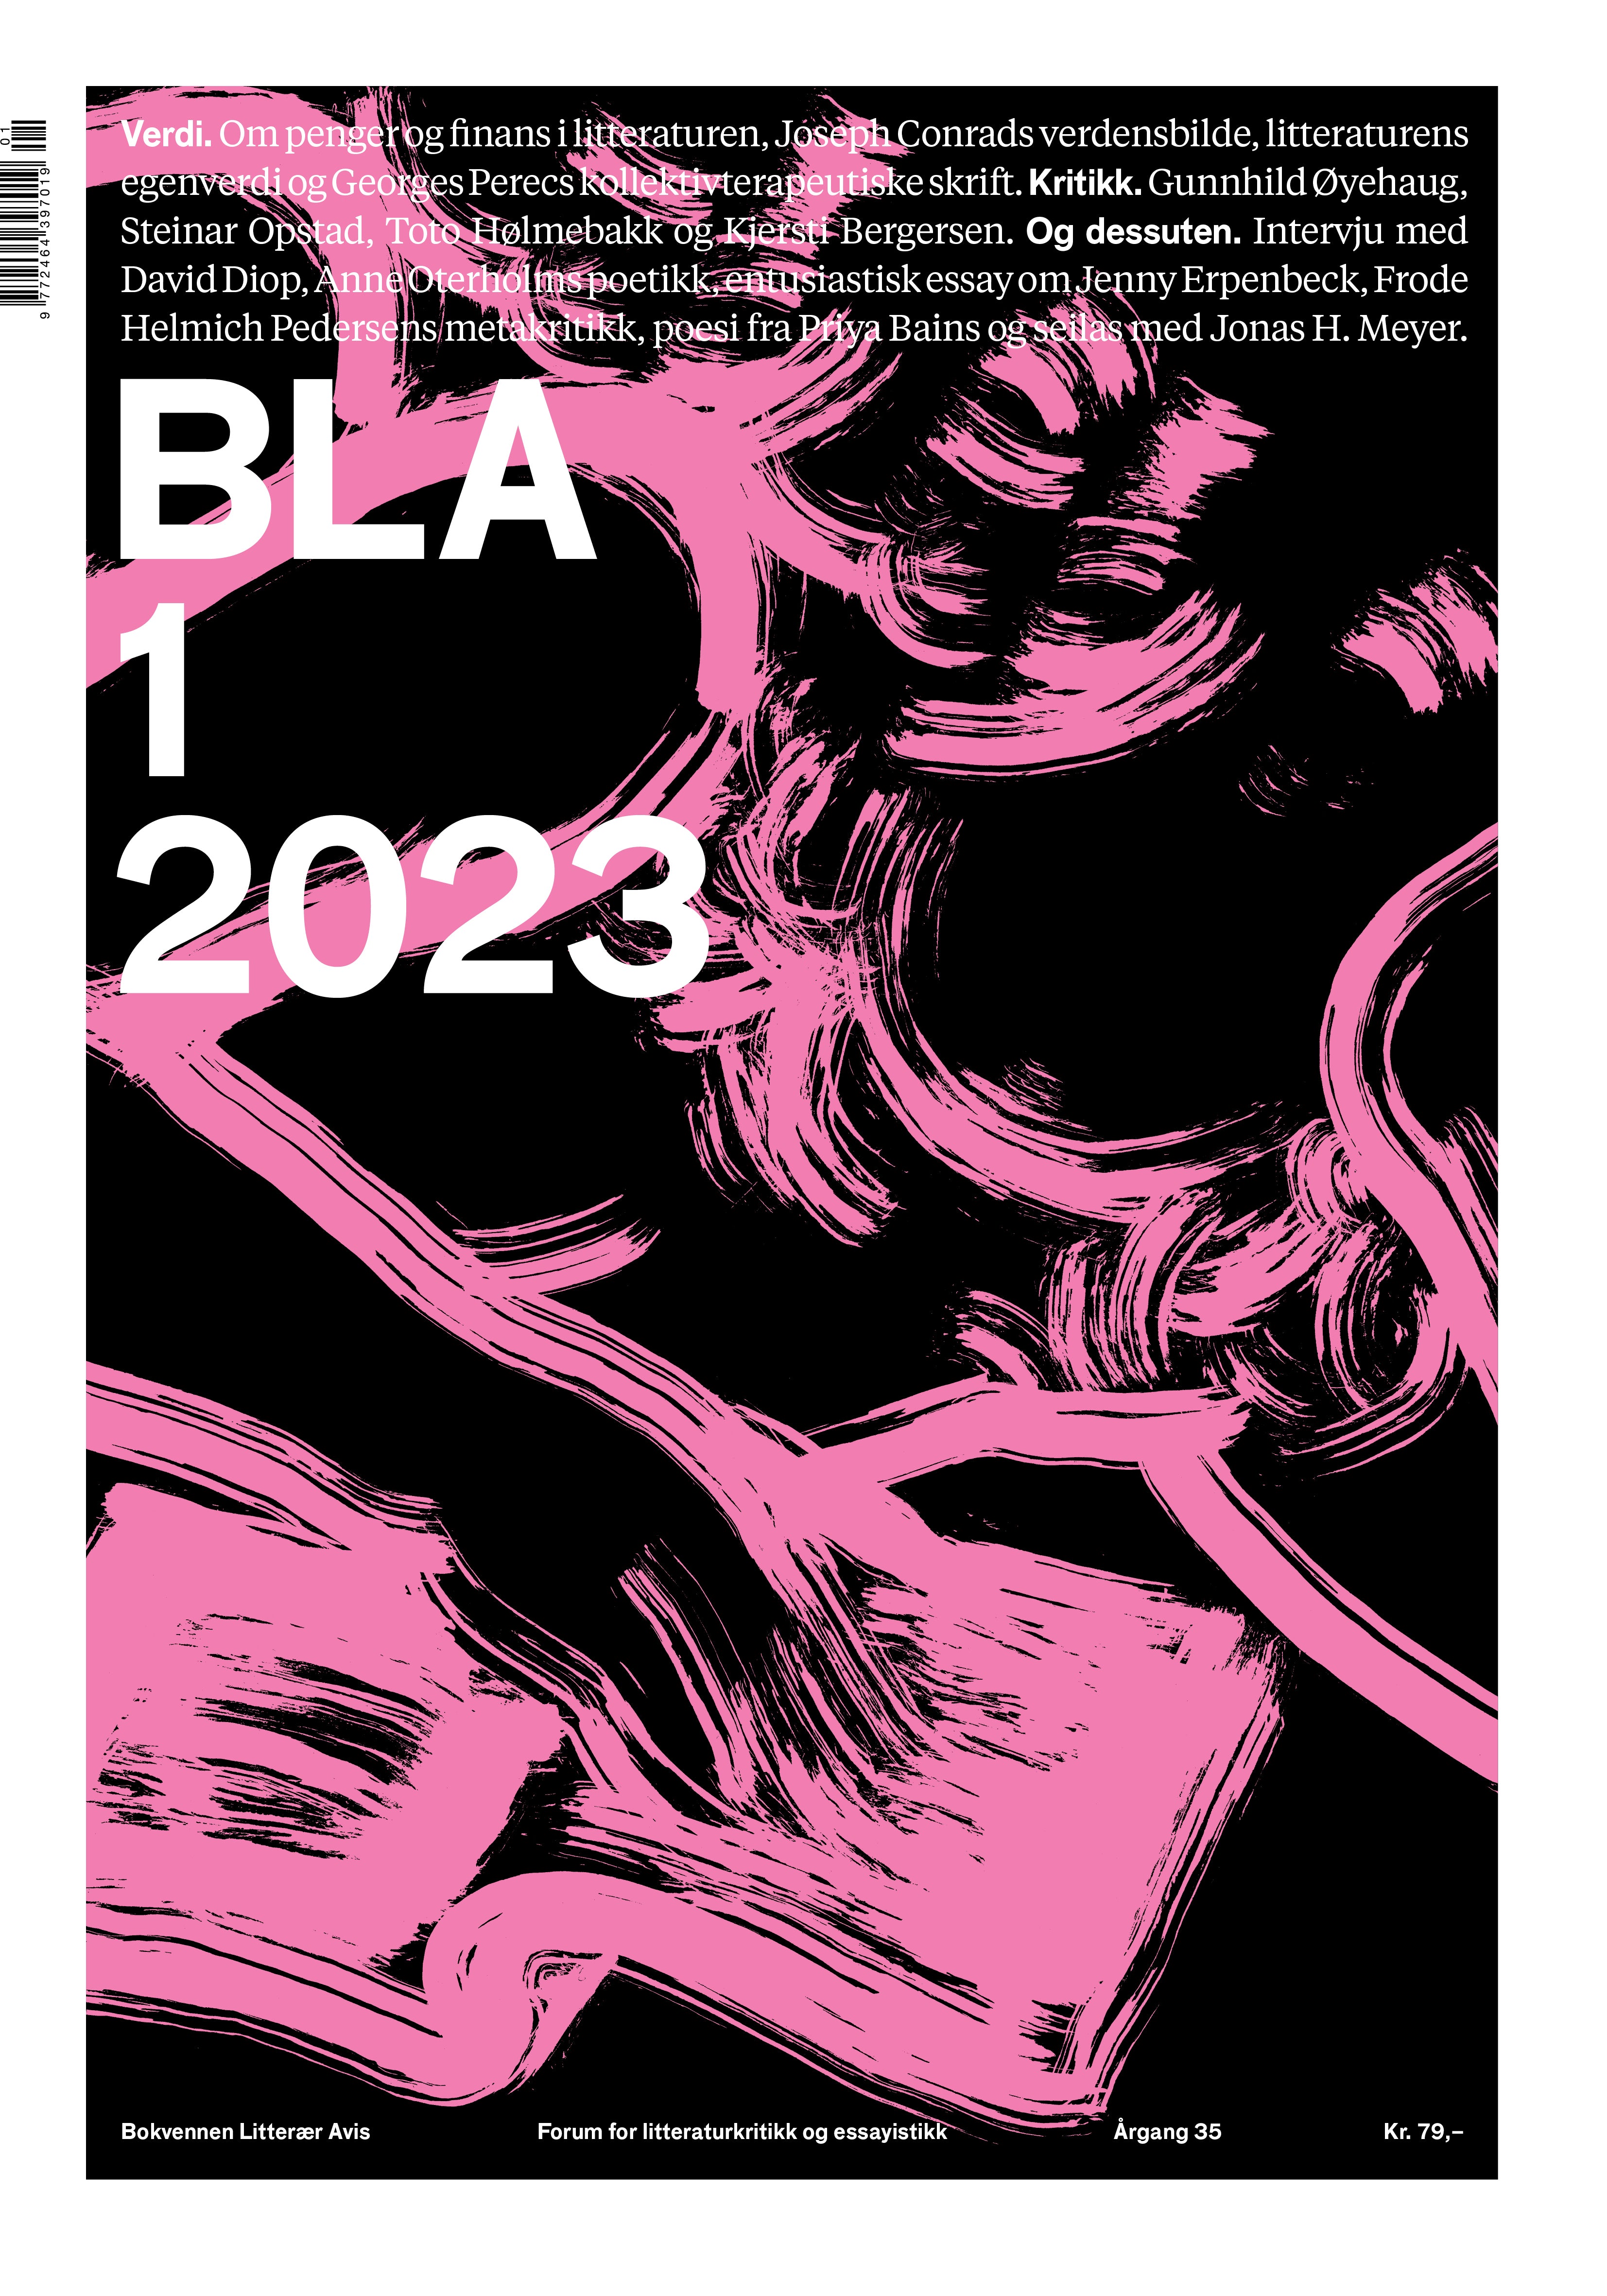 BLA - Bokvennen litterær avis. Nr. 1 2023